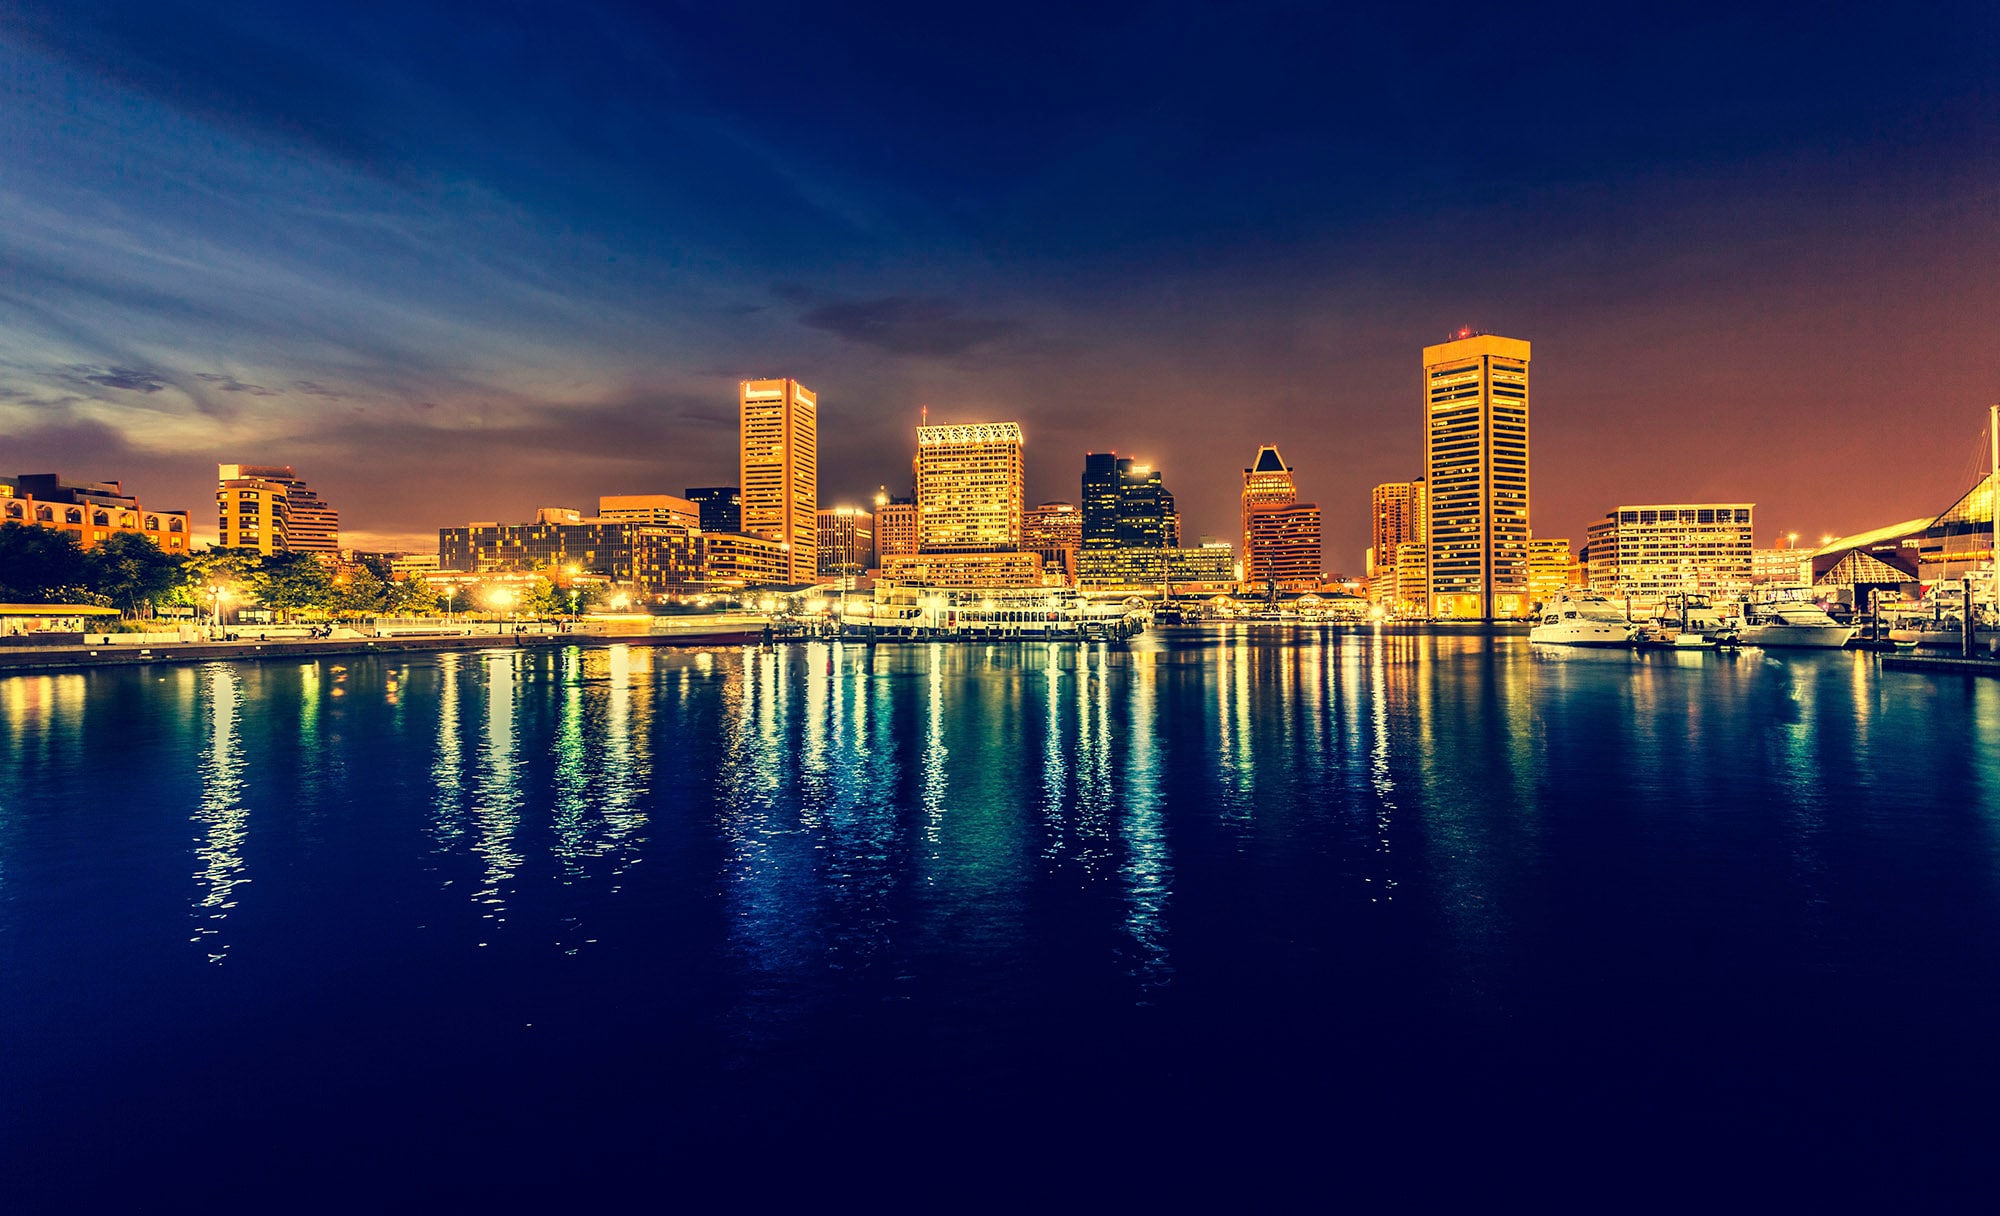 Baltimore Maryland skyline